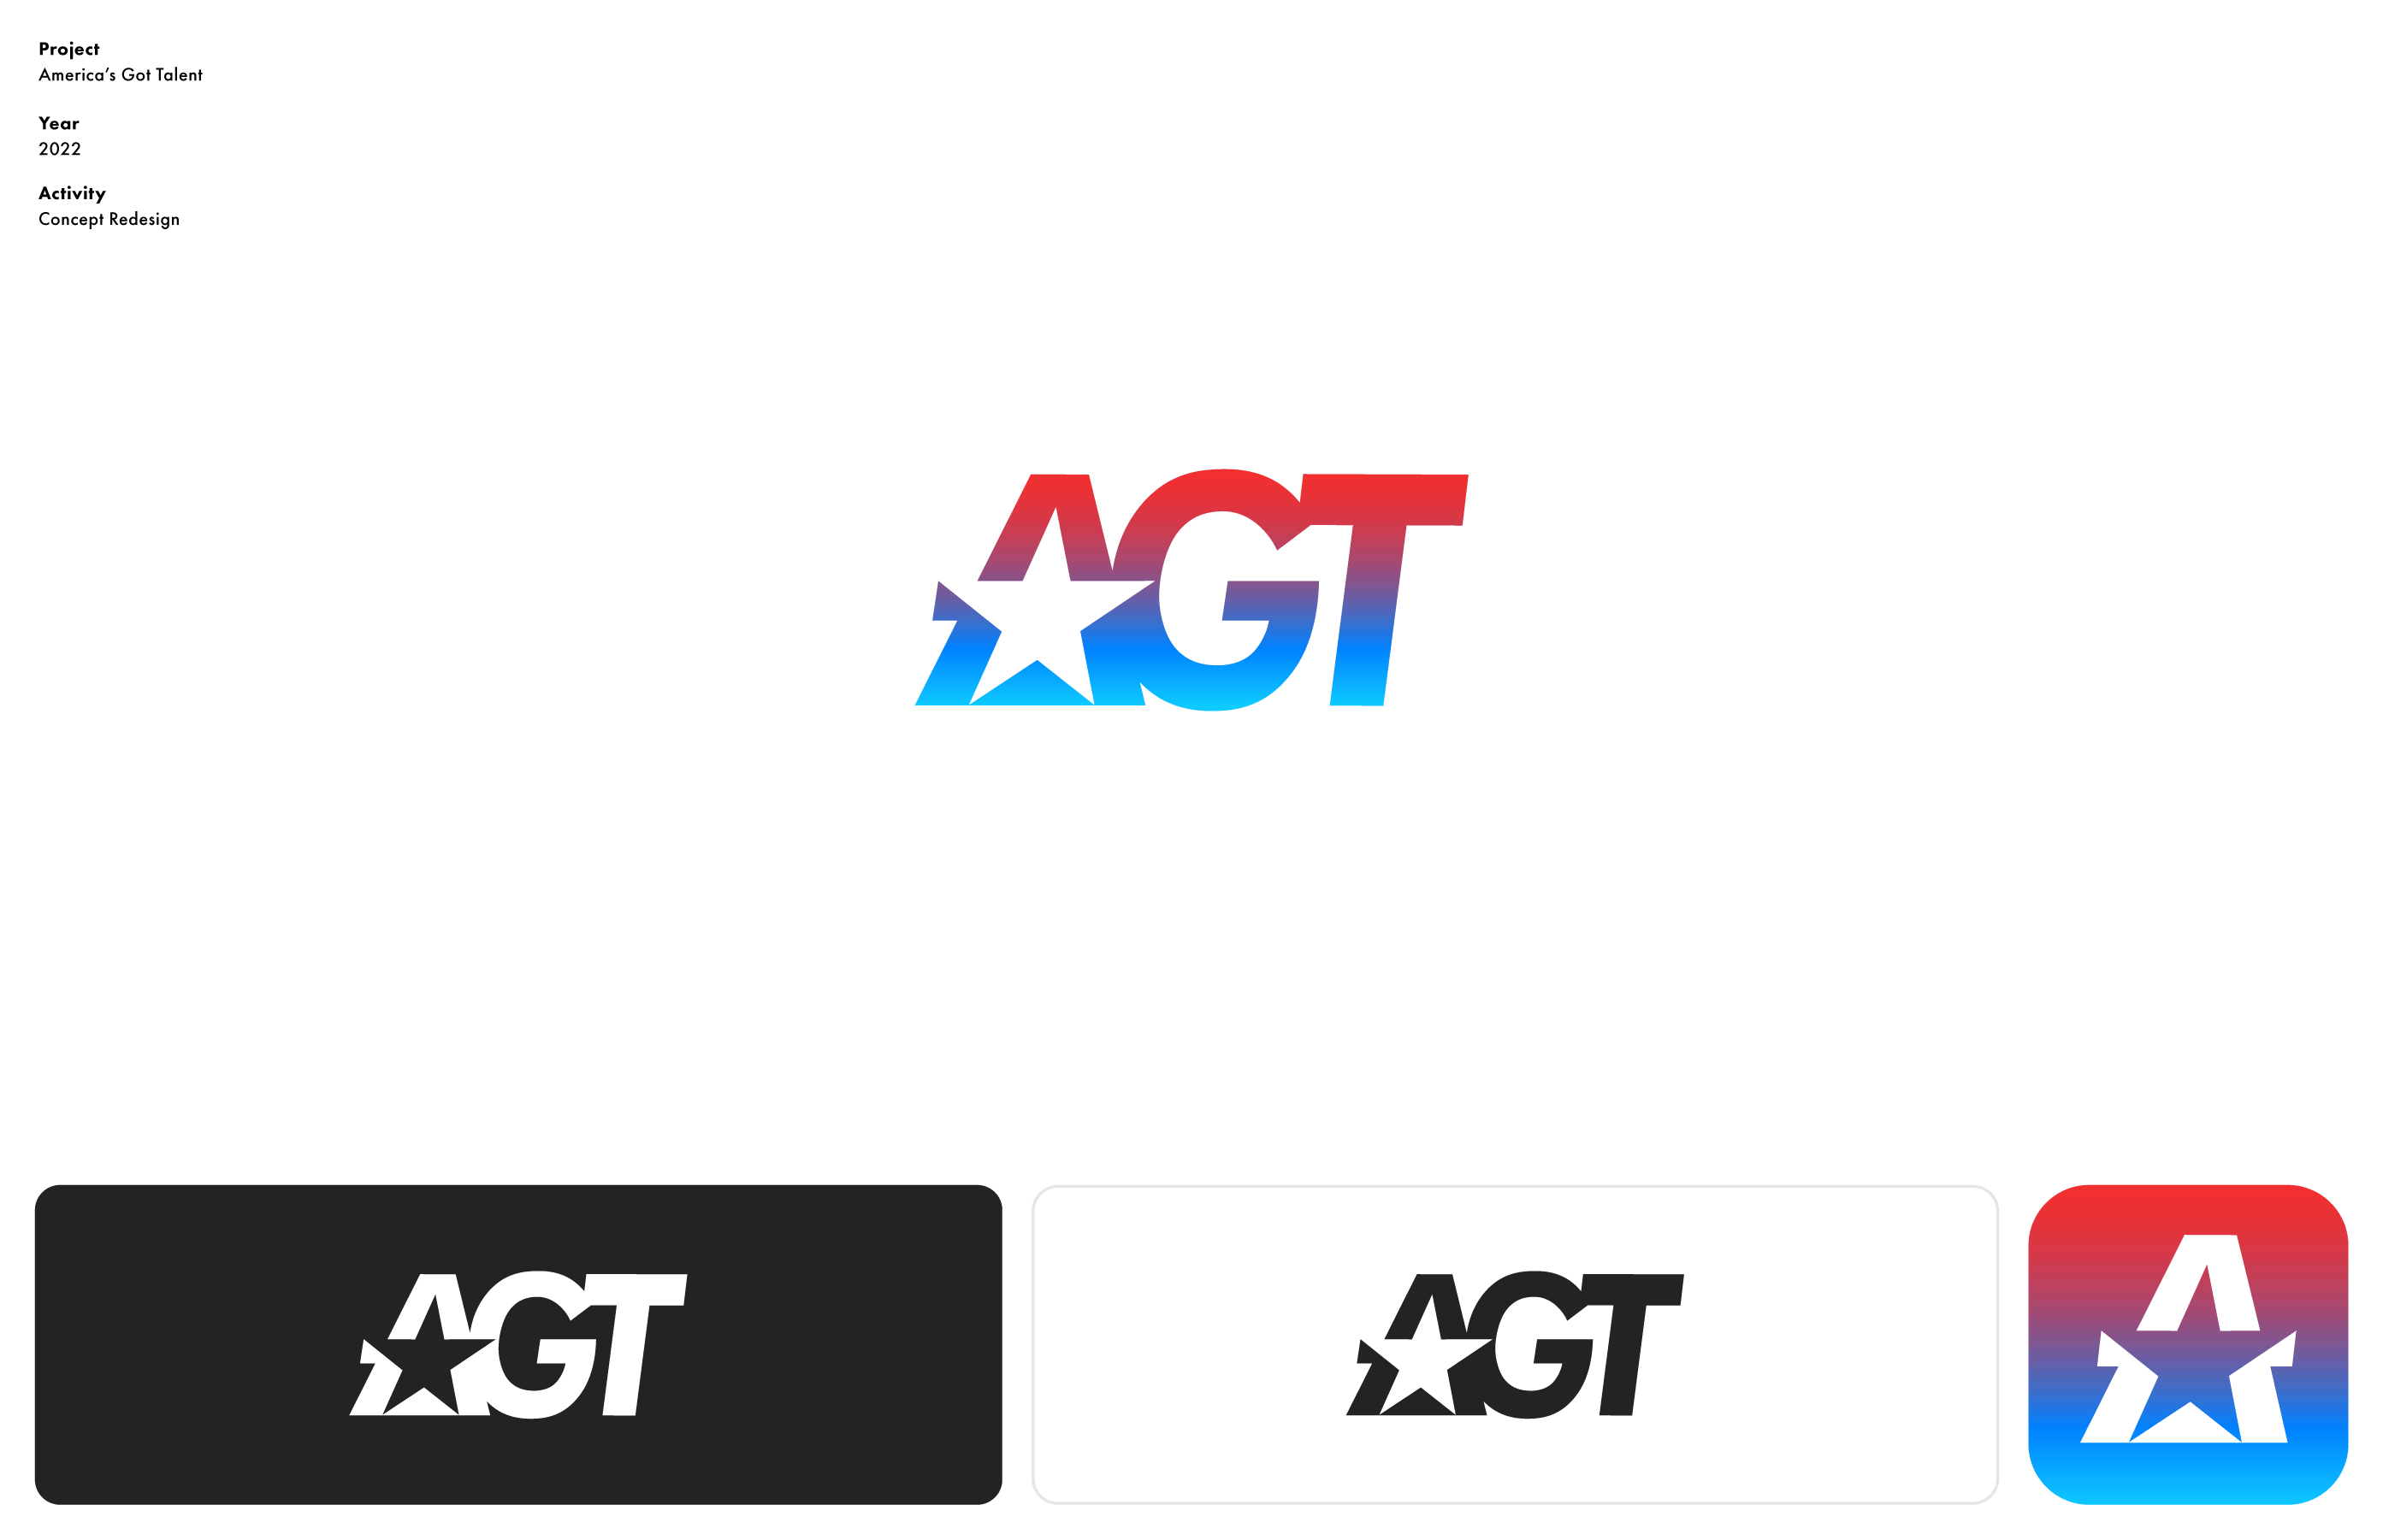 wordmark logotype for america's got talent concept redesign by mihai dolganiuc design